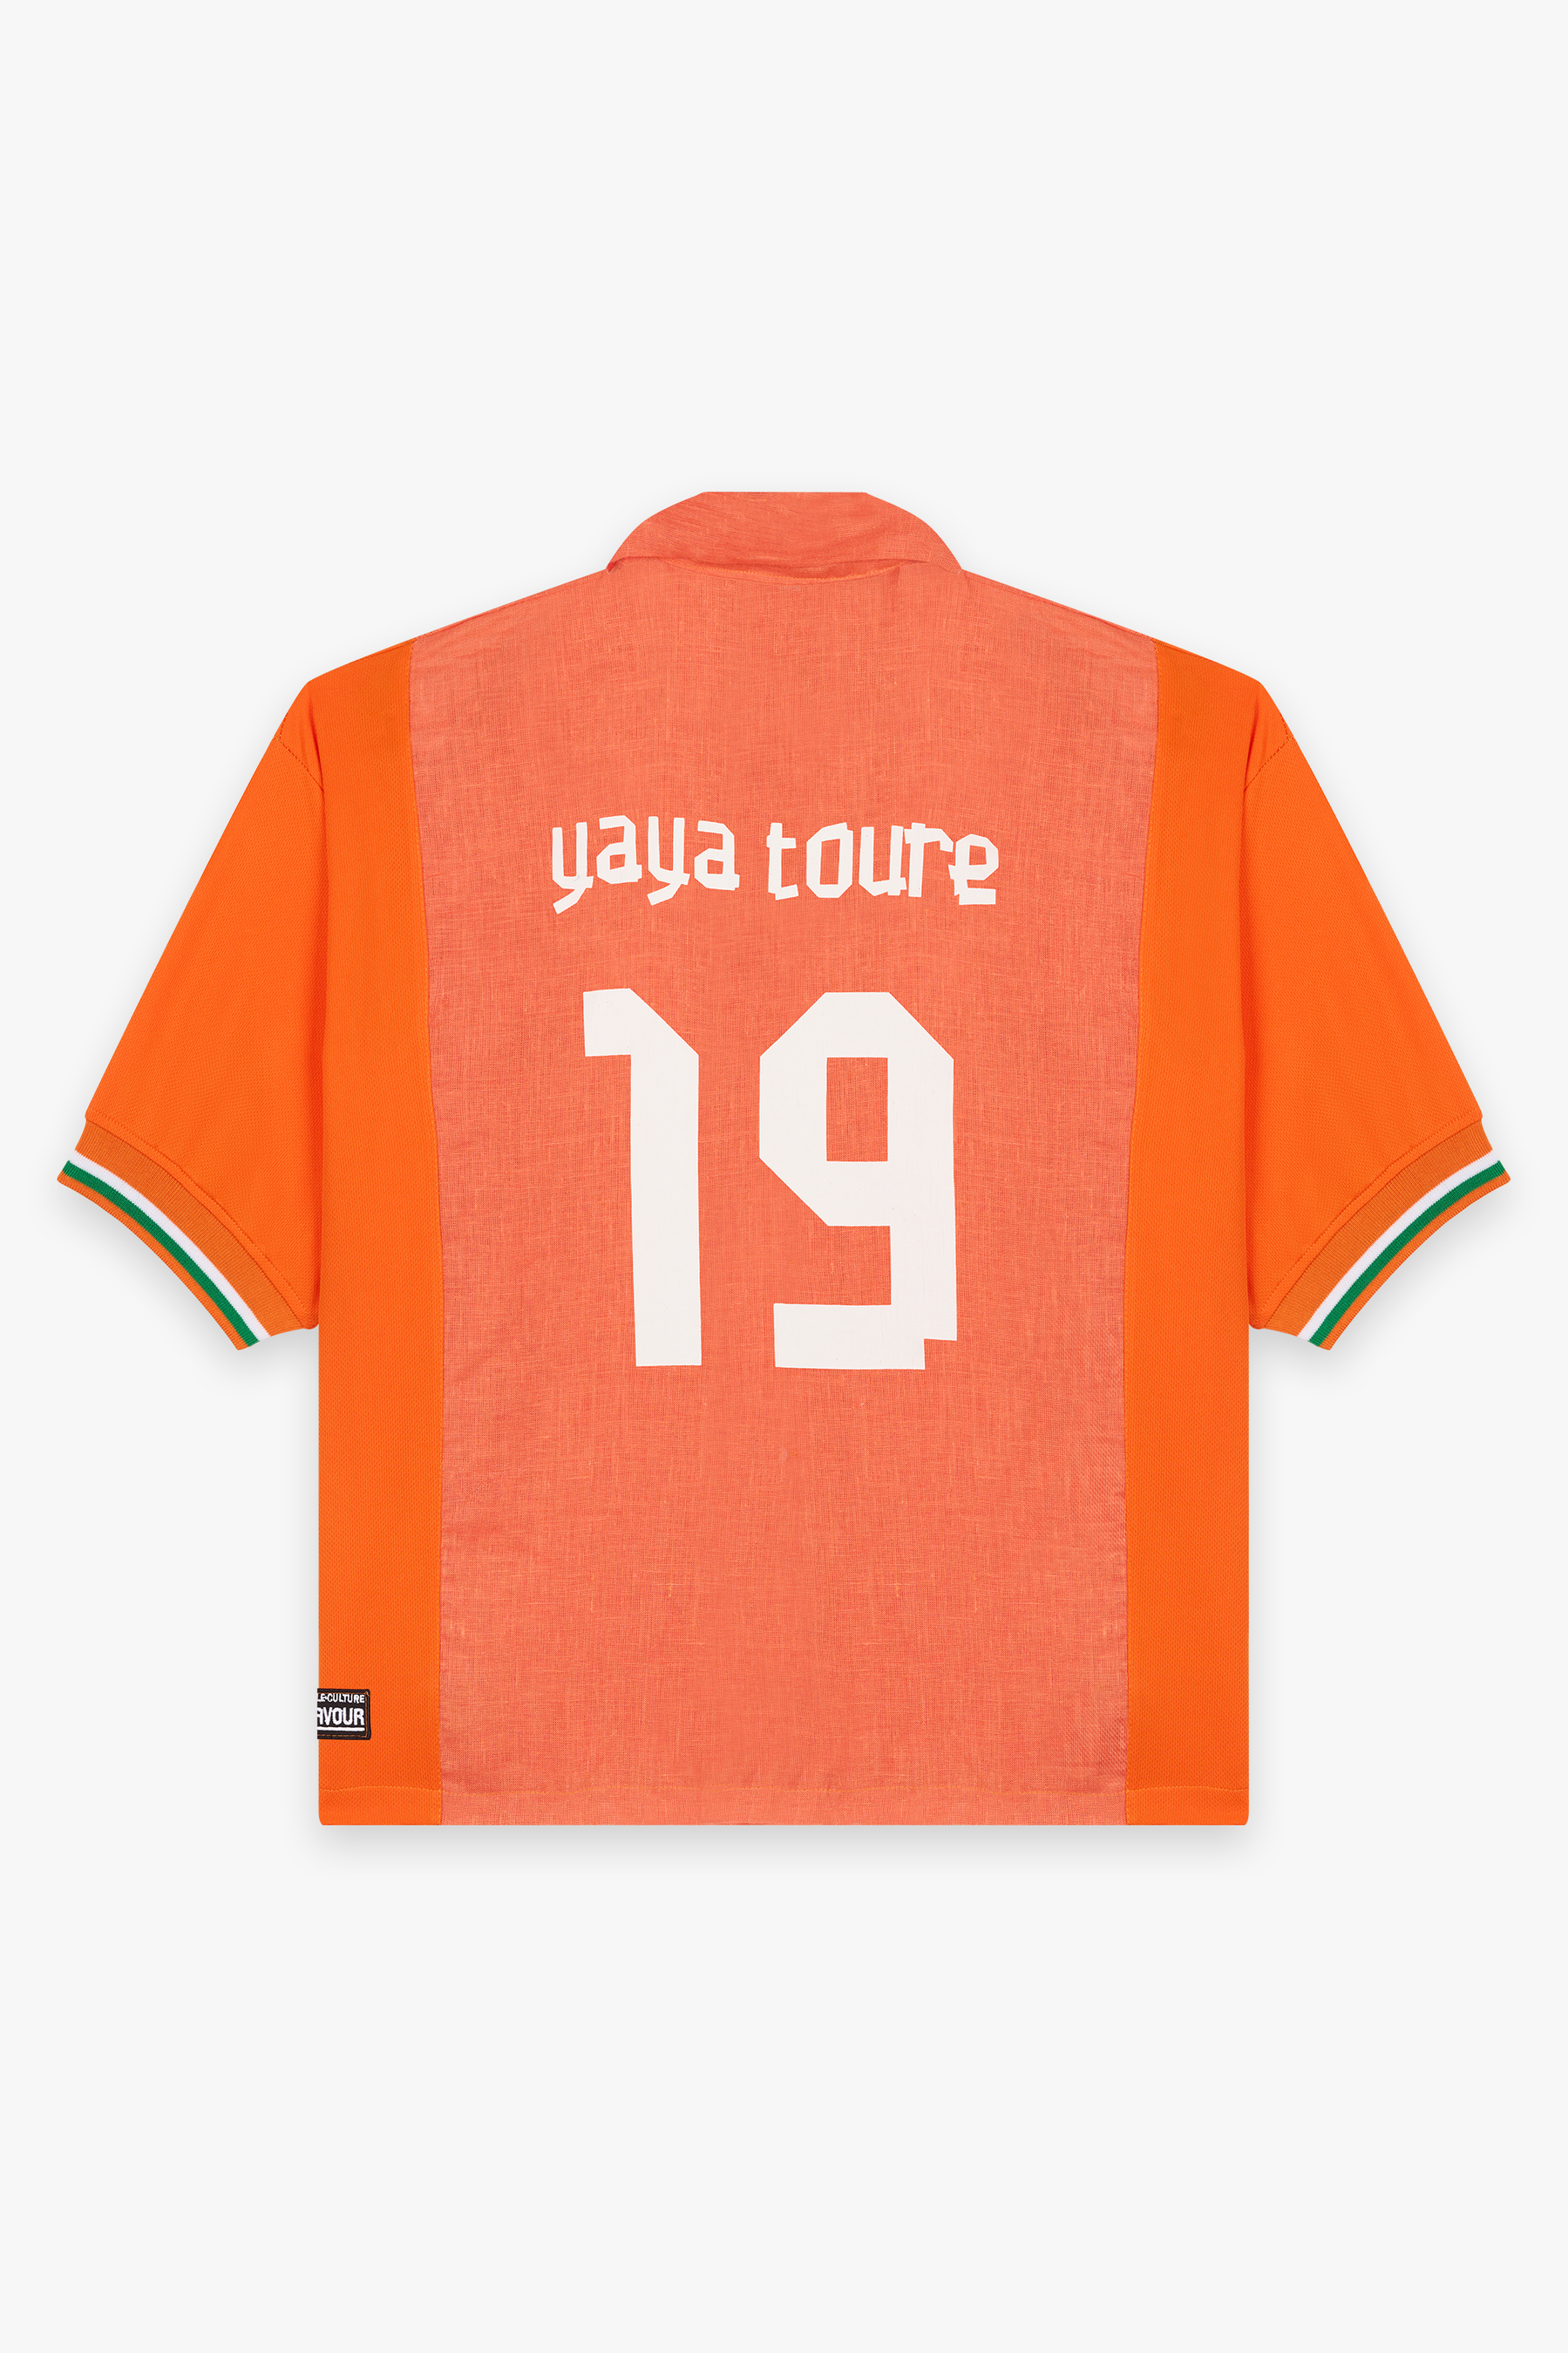 Yaya Toure Hybrid Football Jersey Shirt Orange